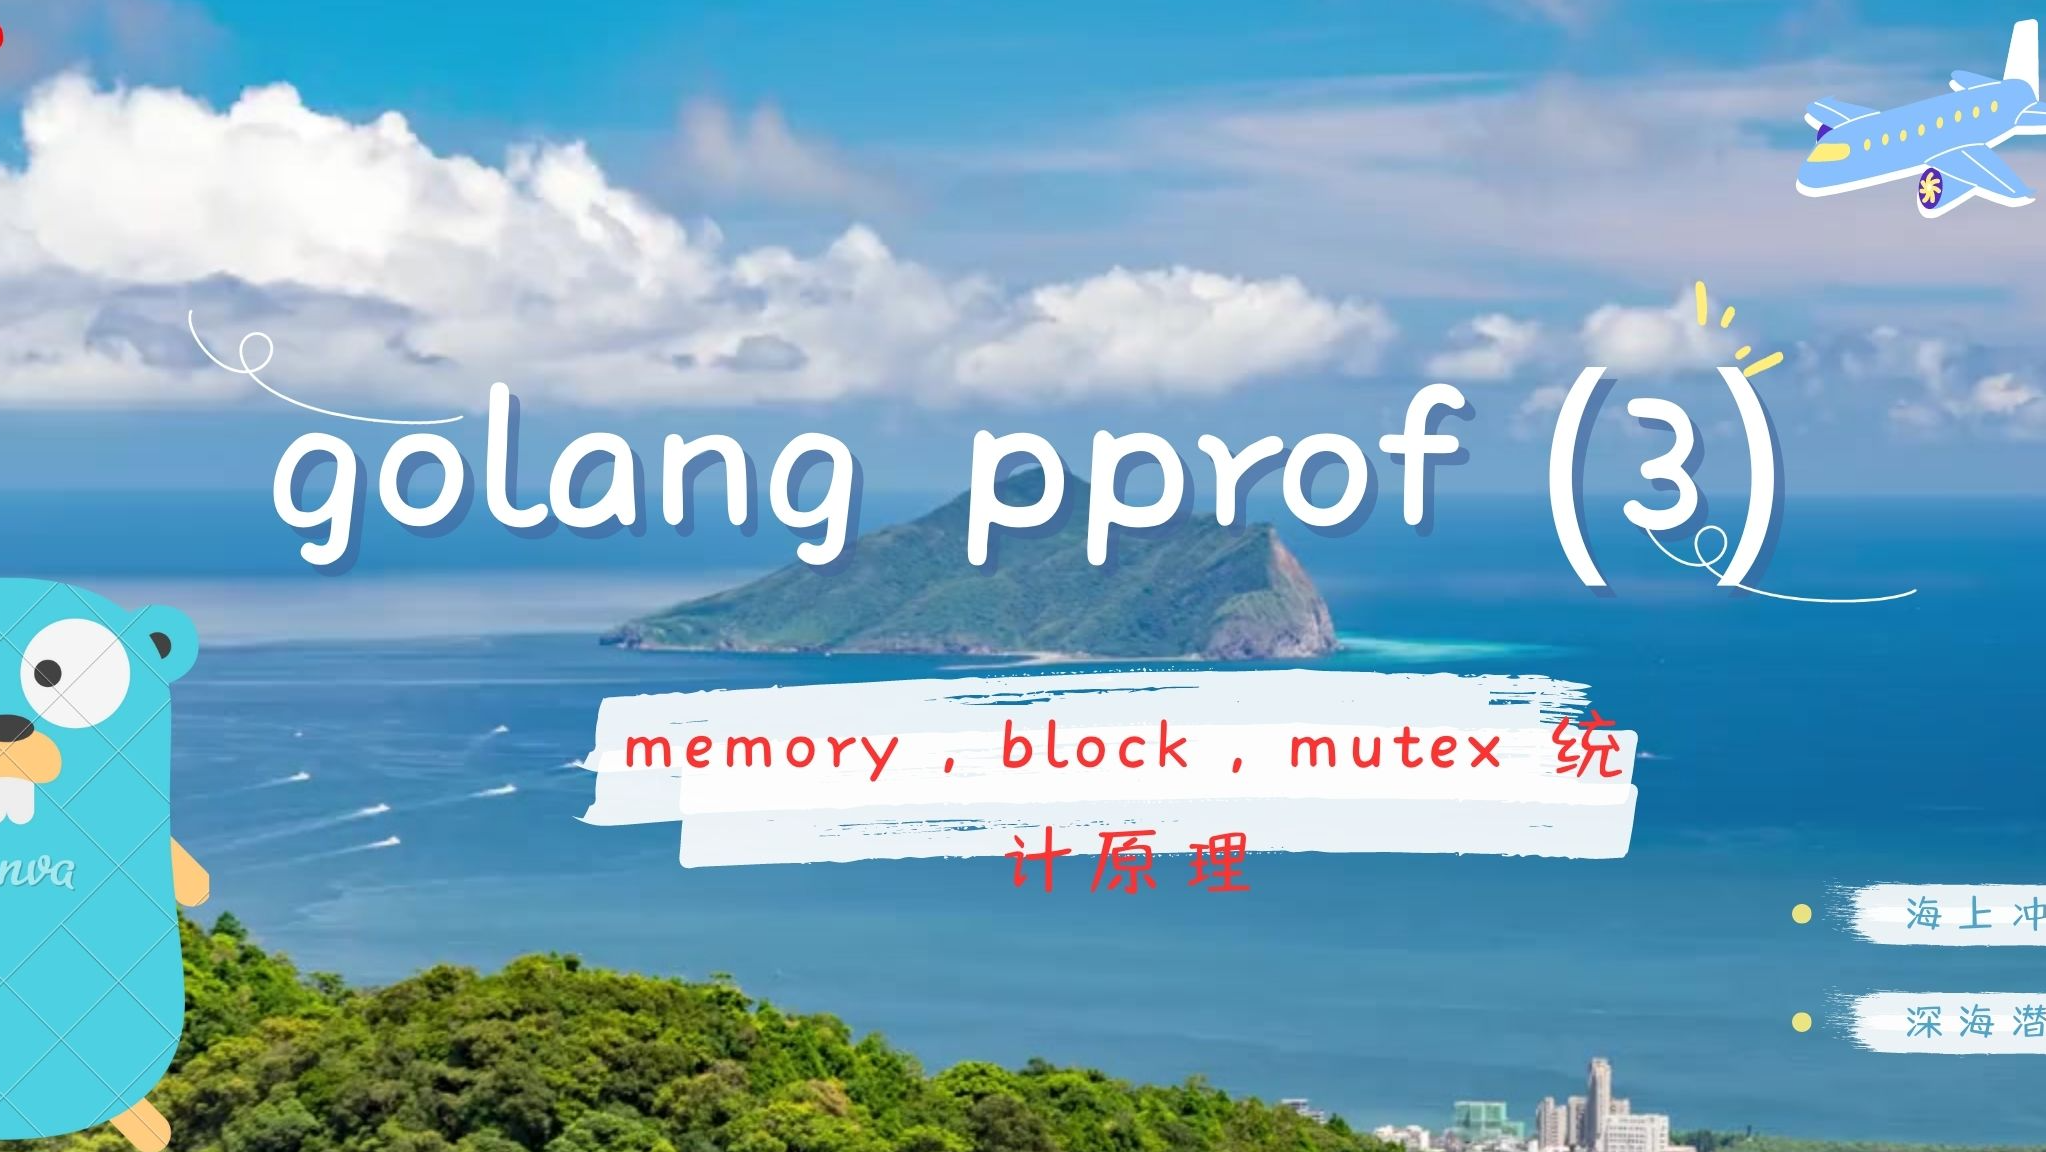 golang pprof 监控系列(3) —— memory，block，mutex 统计原理